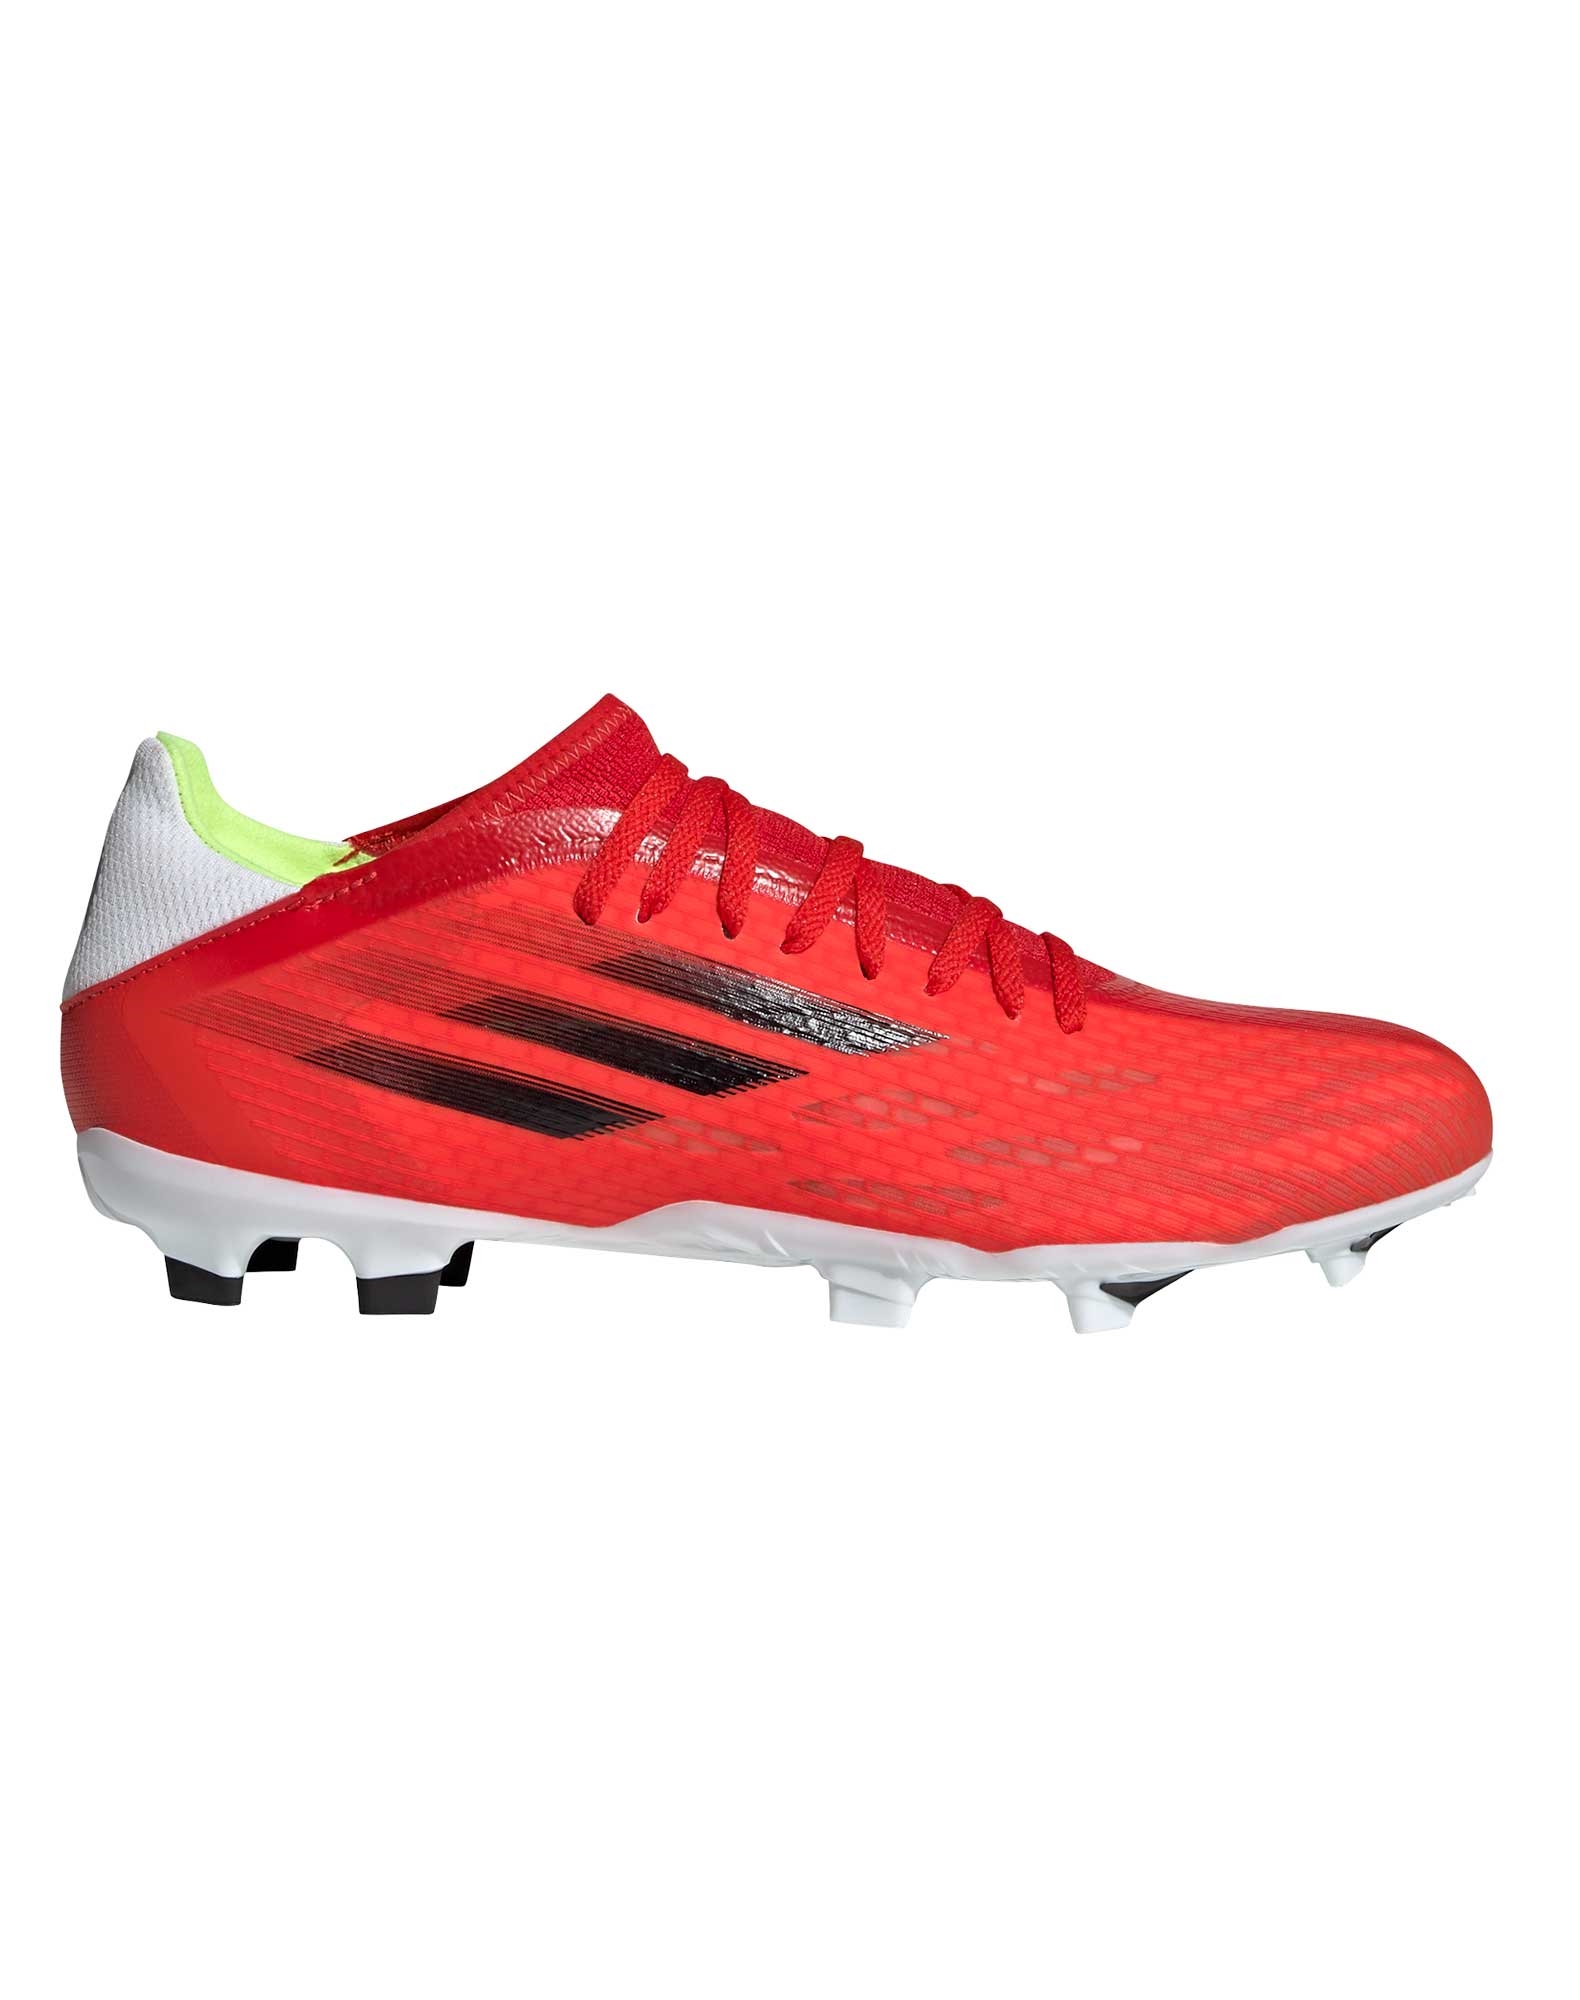 Adidas Speedflow 3 FG fodboldstøvler til herre